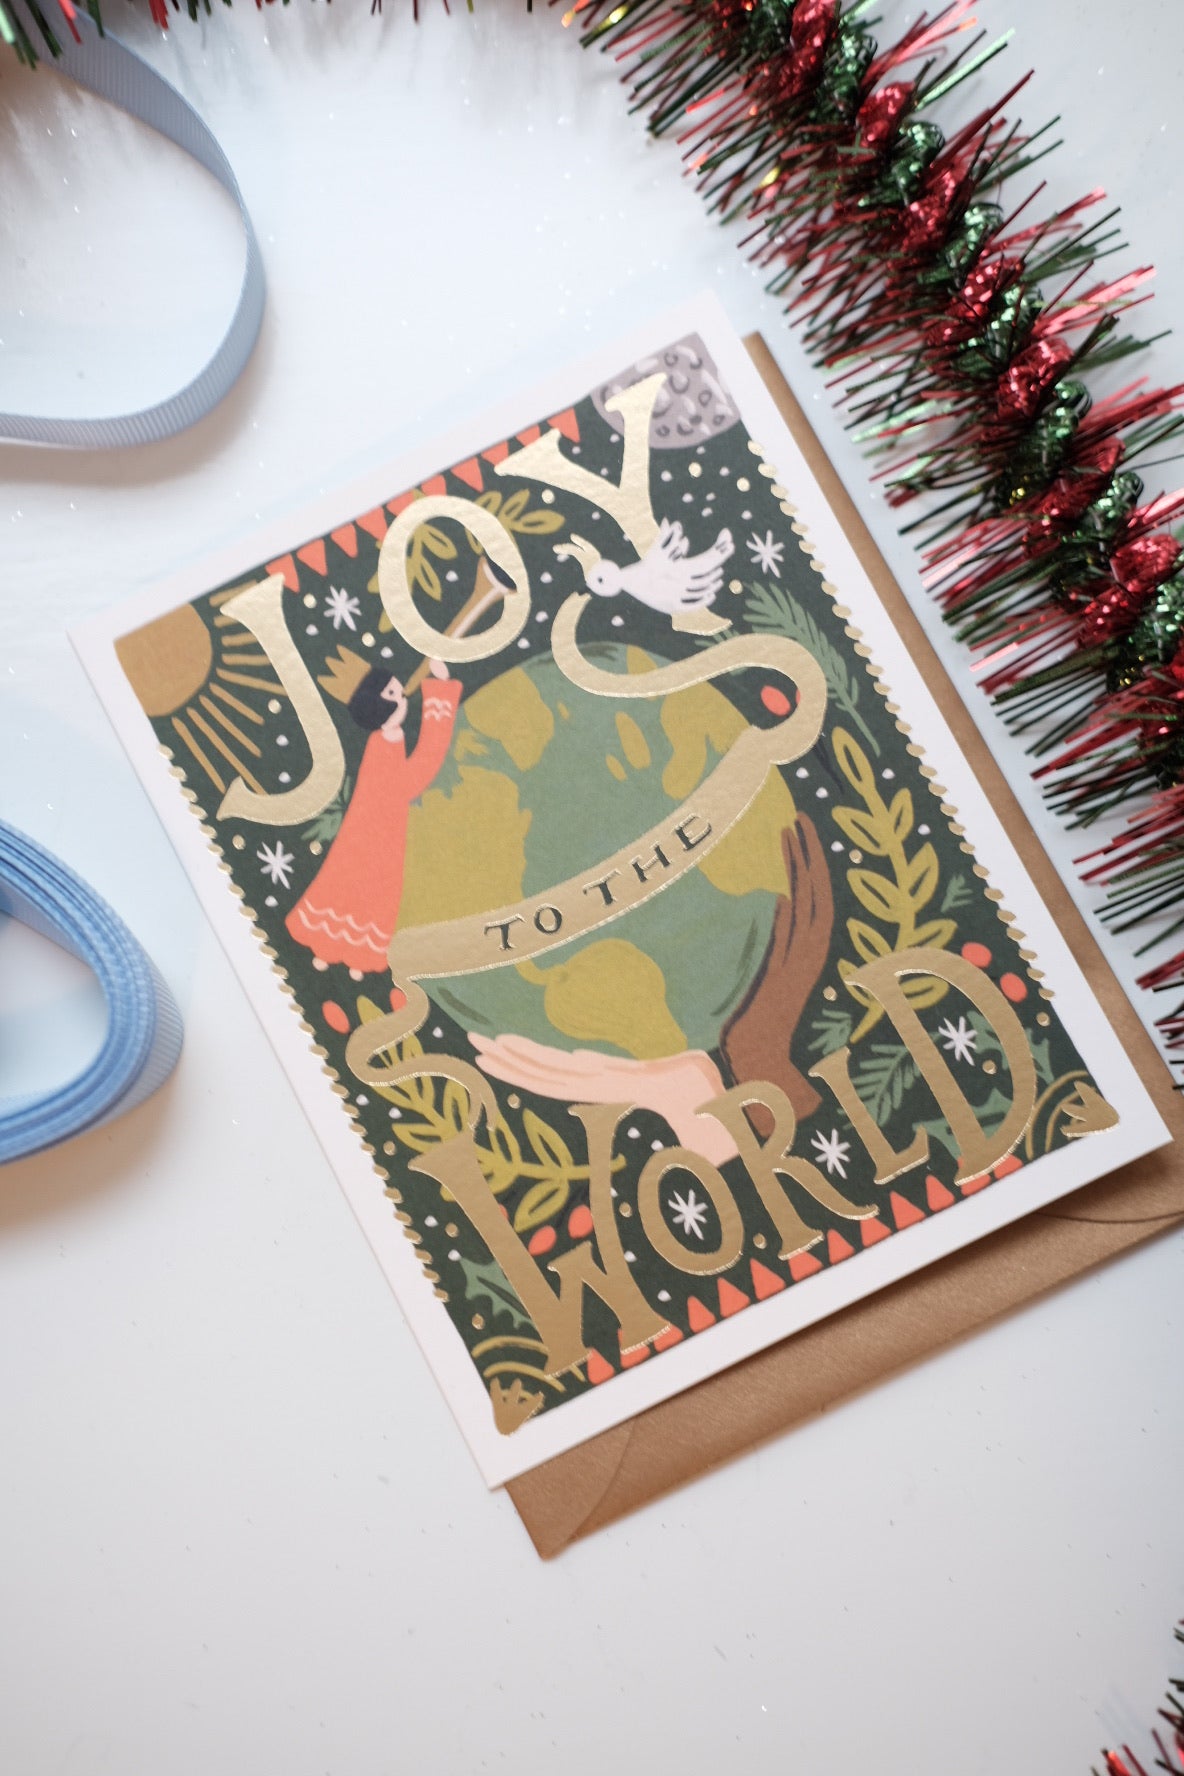 Christmas card • Joy to the world • Globe